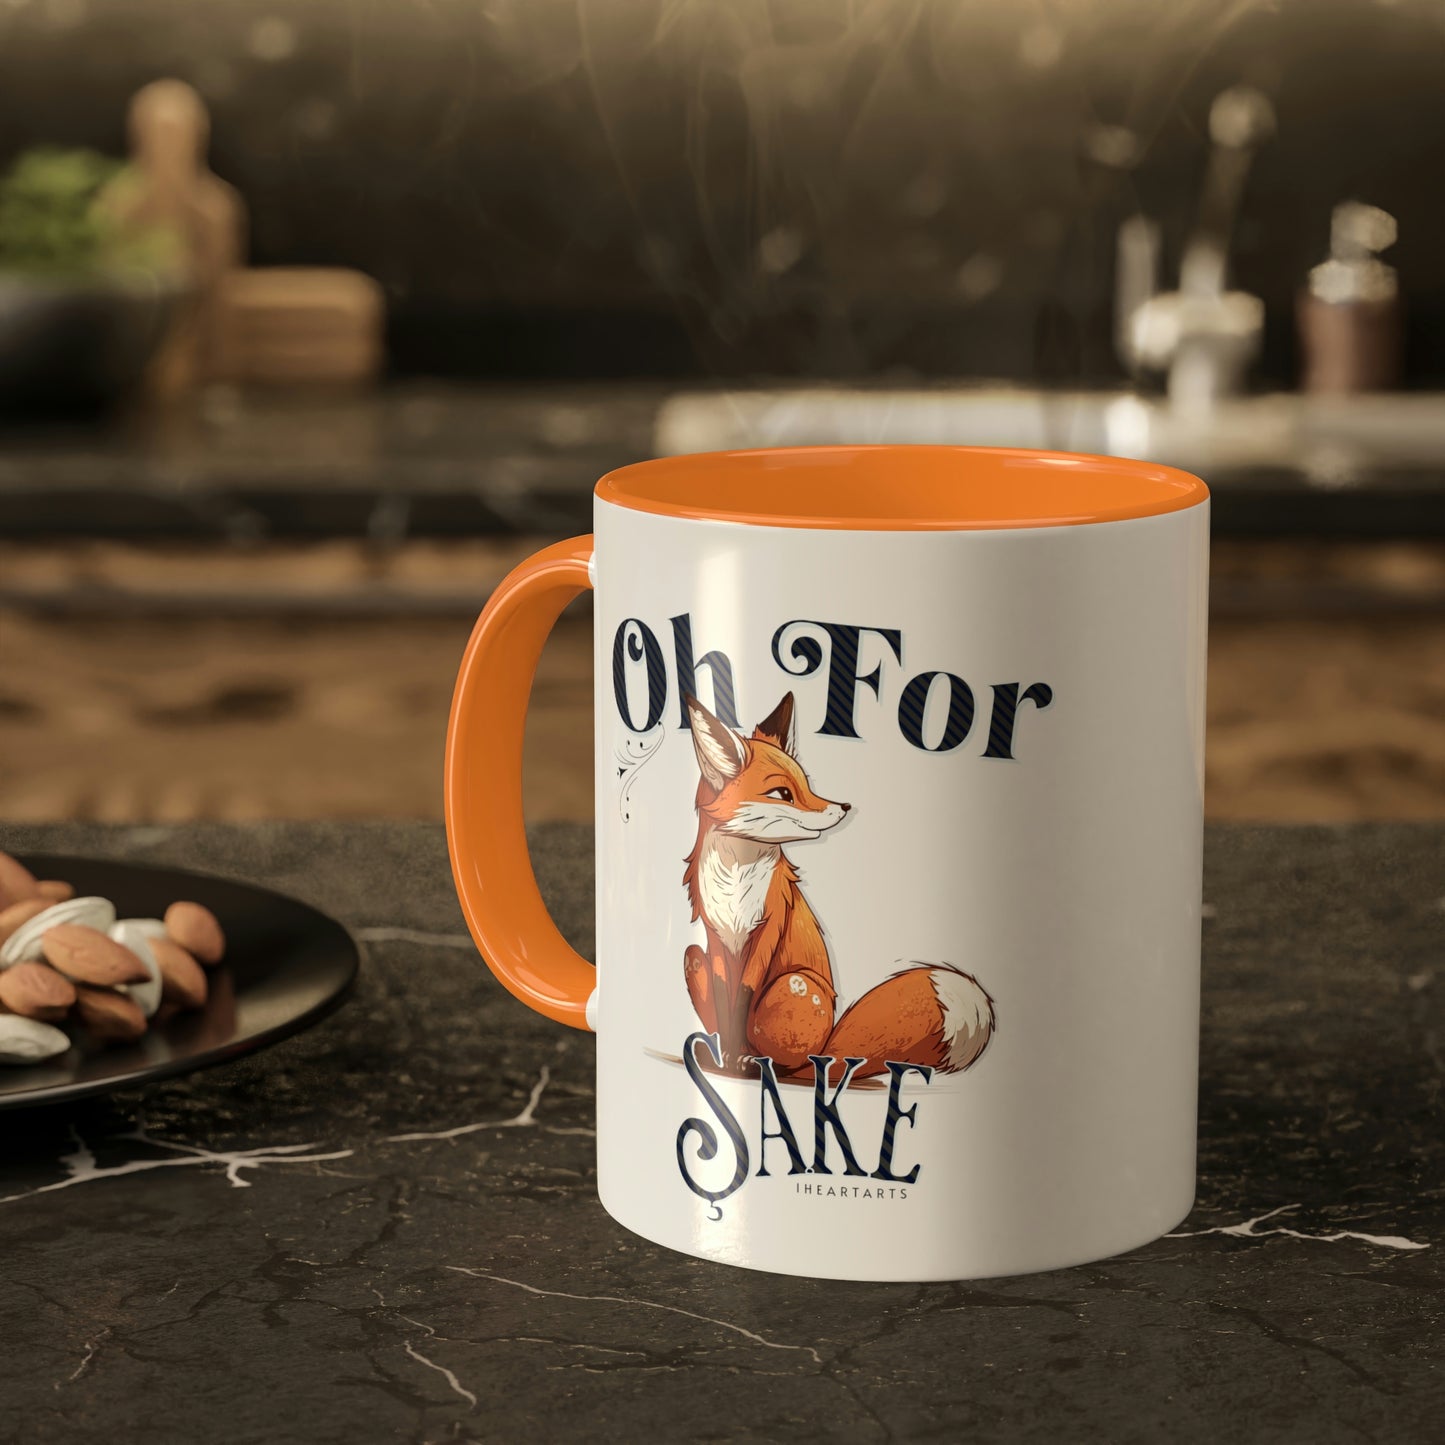 Oh For Fox Sake, Fox Lovers Gifts Idea, Cute Mugs, Funny Novelty Gift for Coffee & Tea Lovers - Orange Accent Mug, 11oz